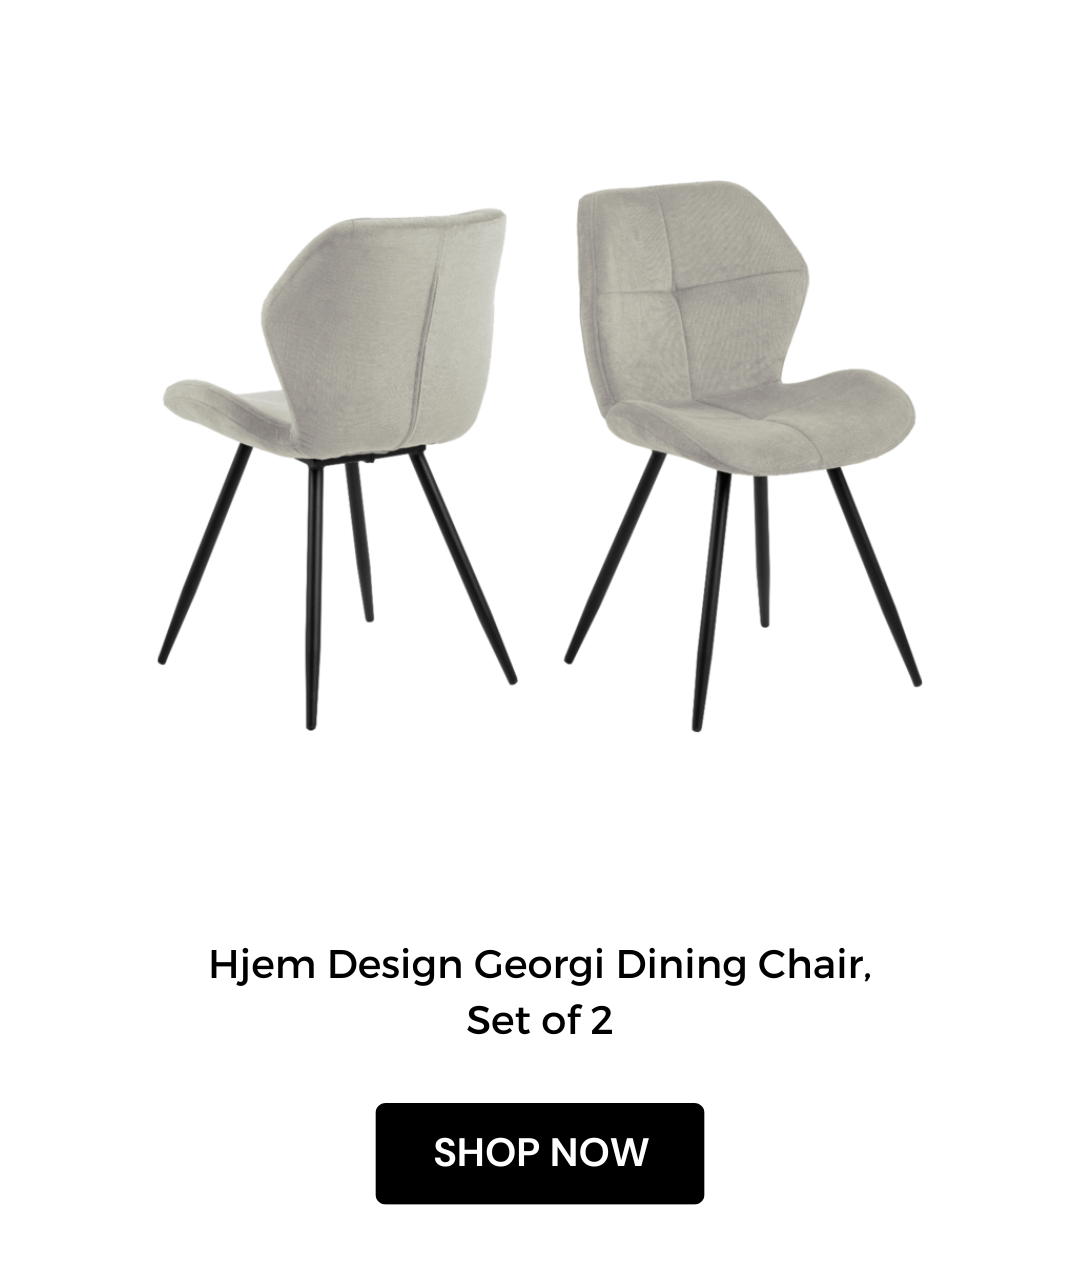 Hjem Design Georgi Dining Chair, Set of 2